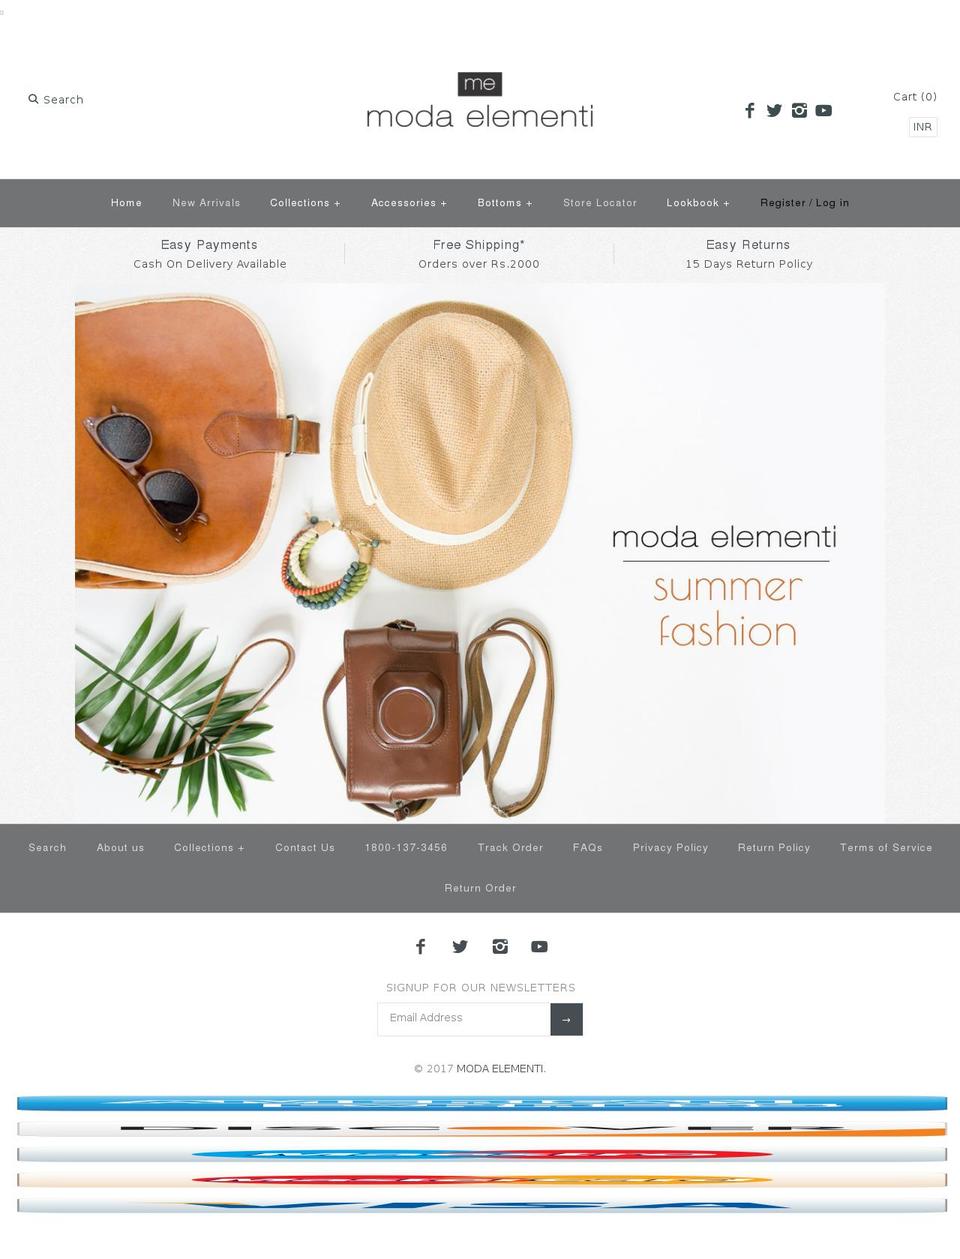 modaelementi.com shopify website screenshot